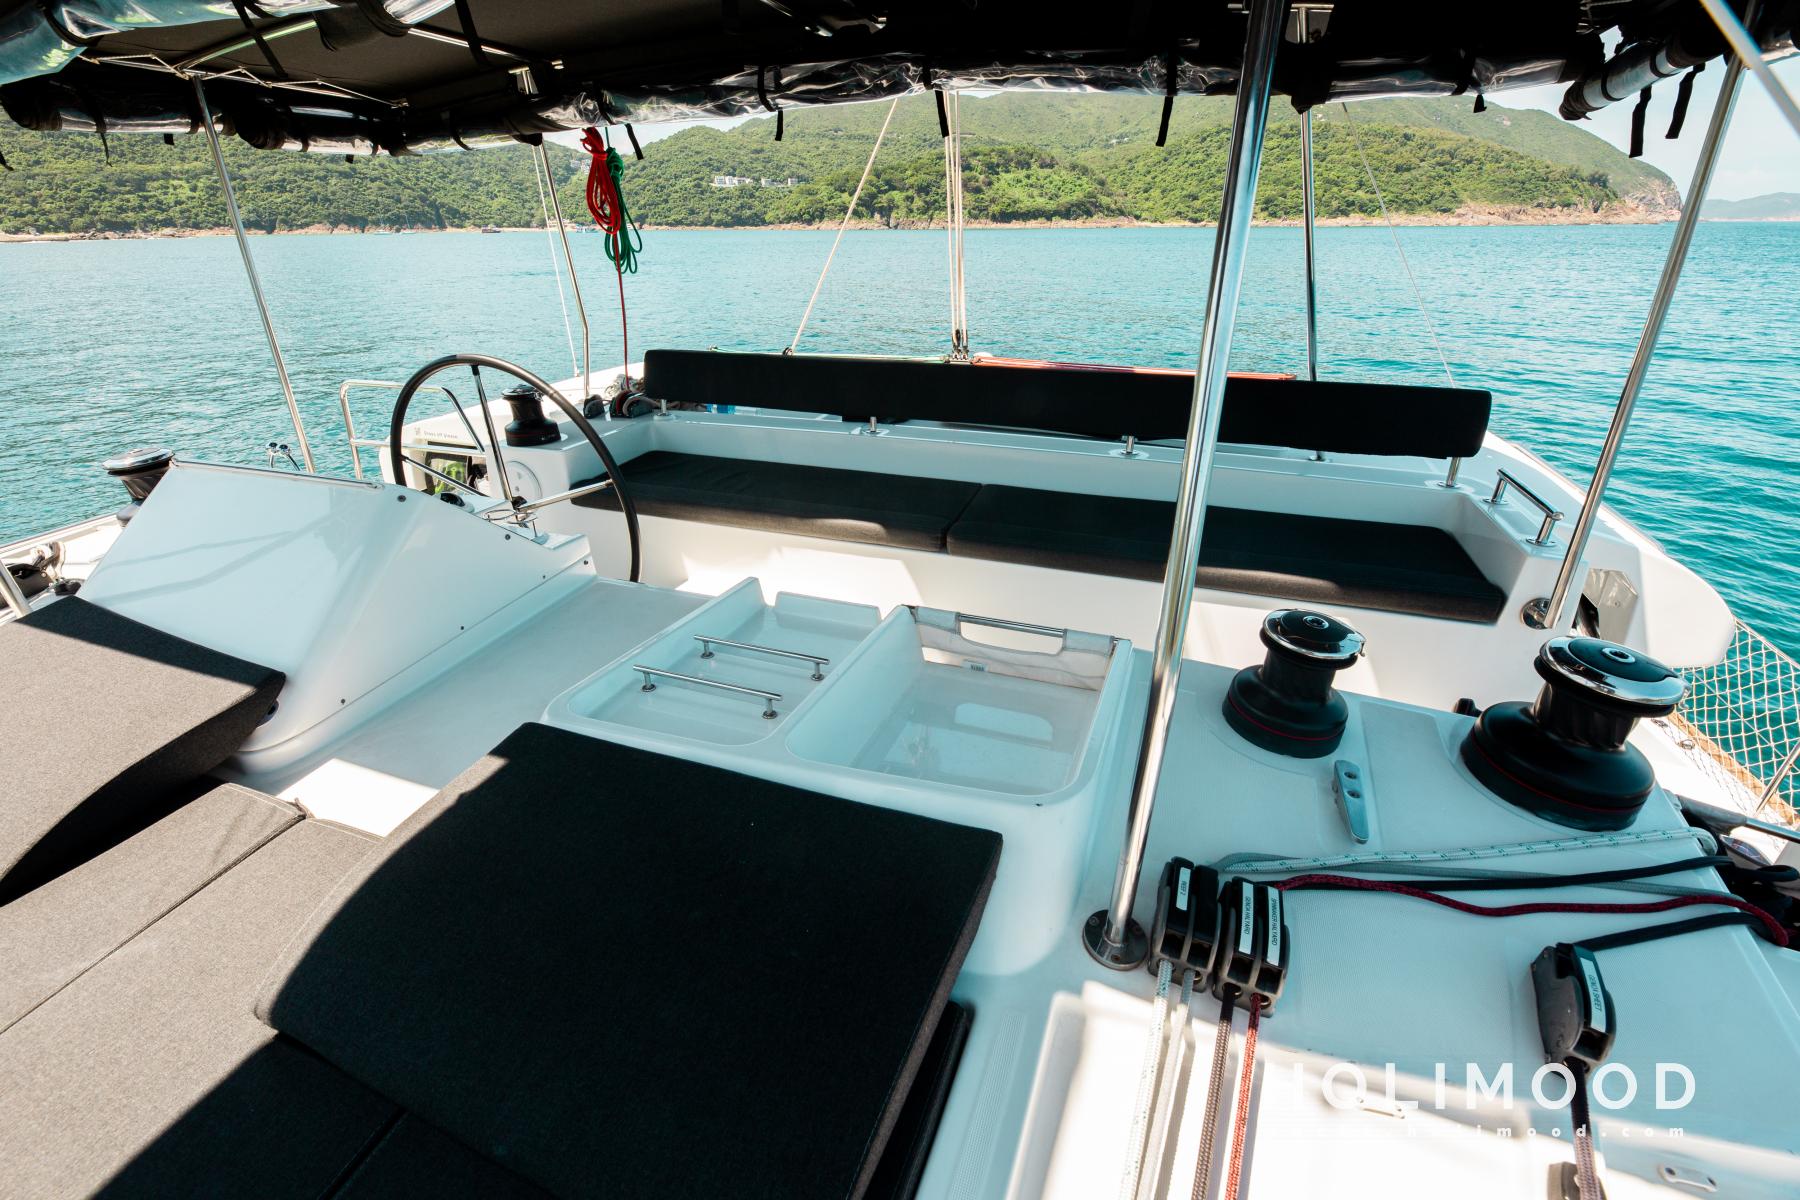 SL01 Catamaran Day Trip (Free BBQ Lunch + Swimming Pool+ Floating Mattress + SUP + Sailing Exp) | Optional $4800 Wakesurf 4 hours 11